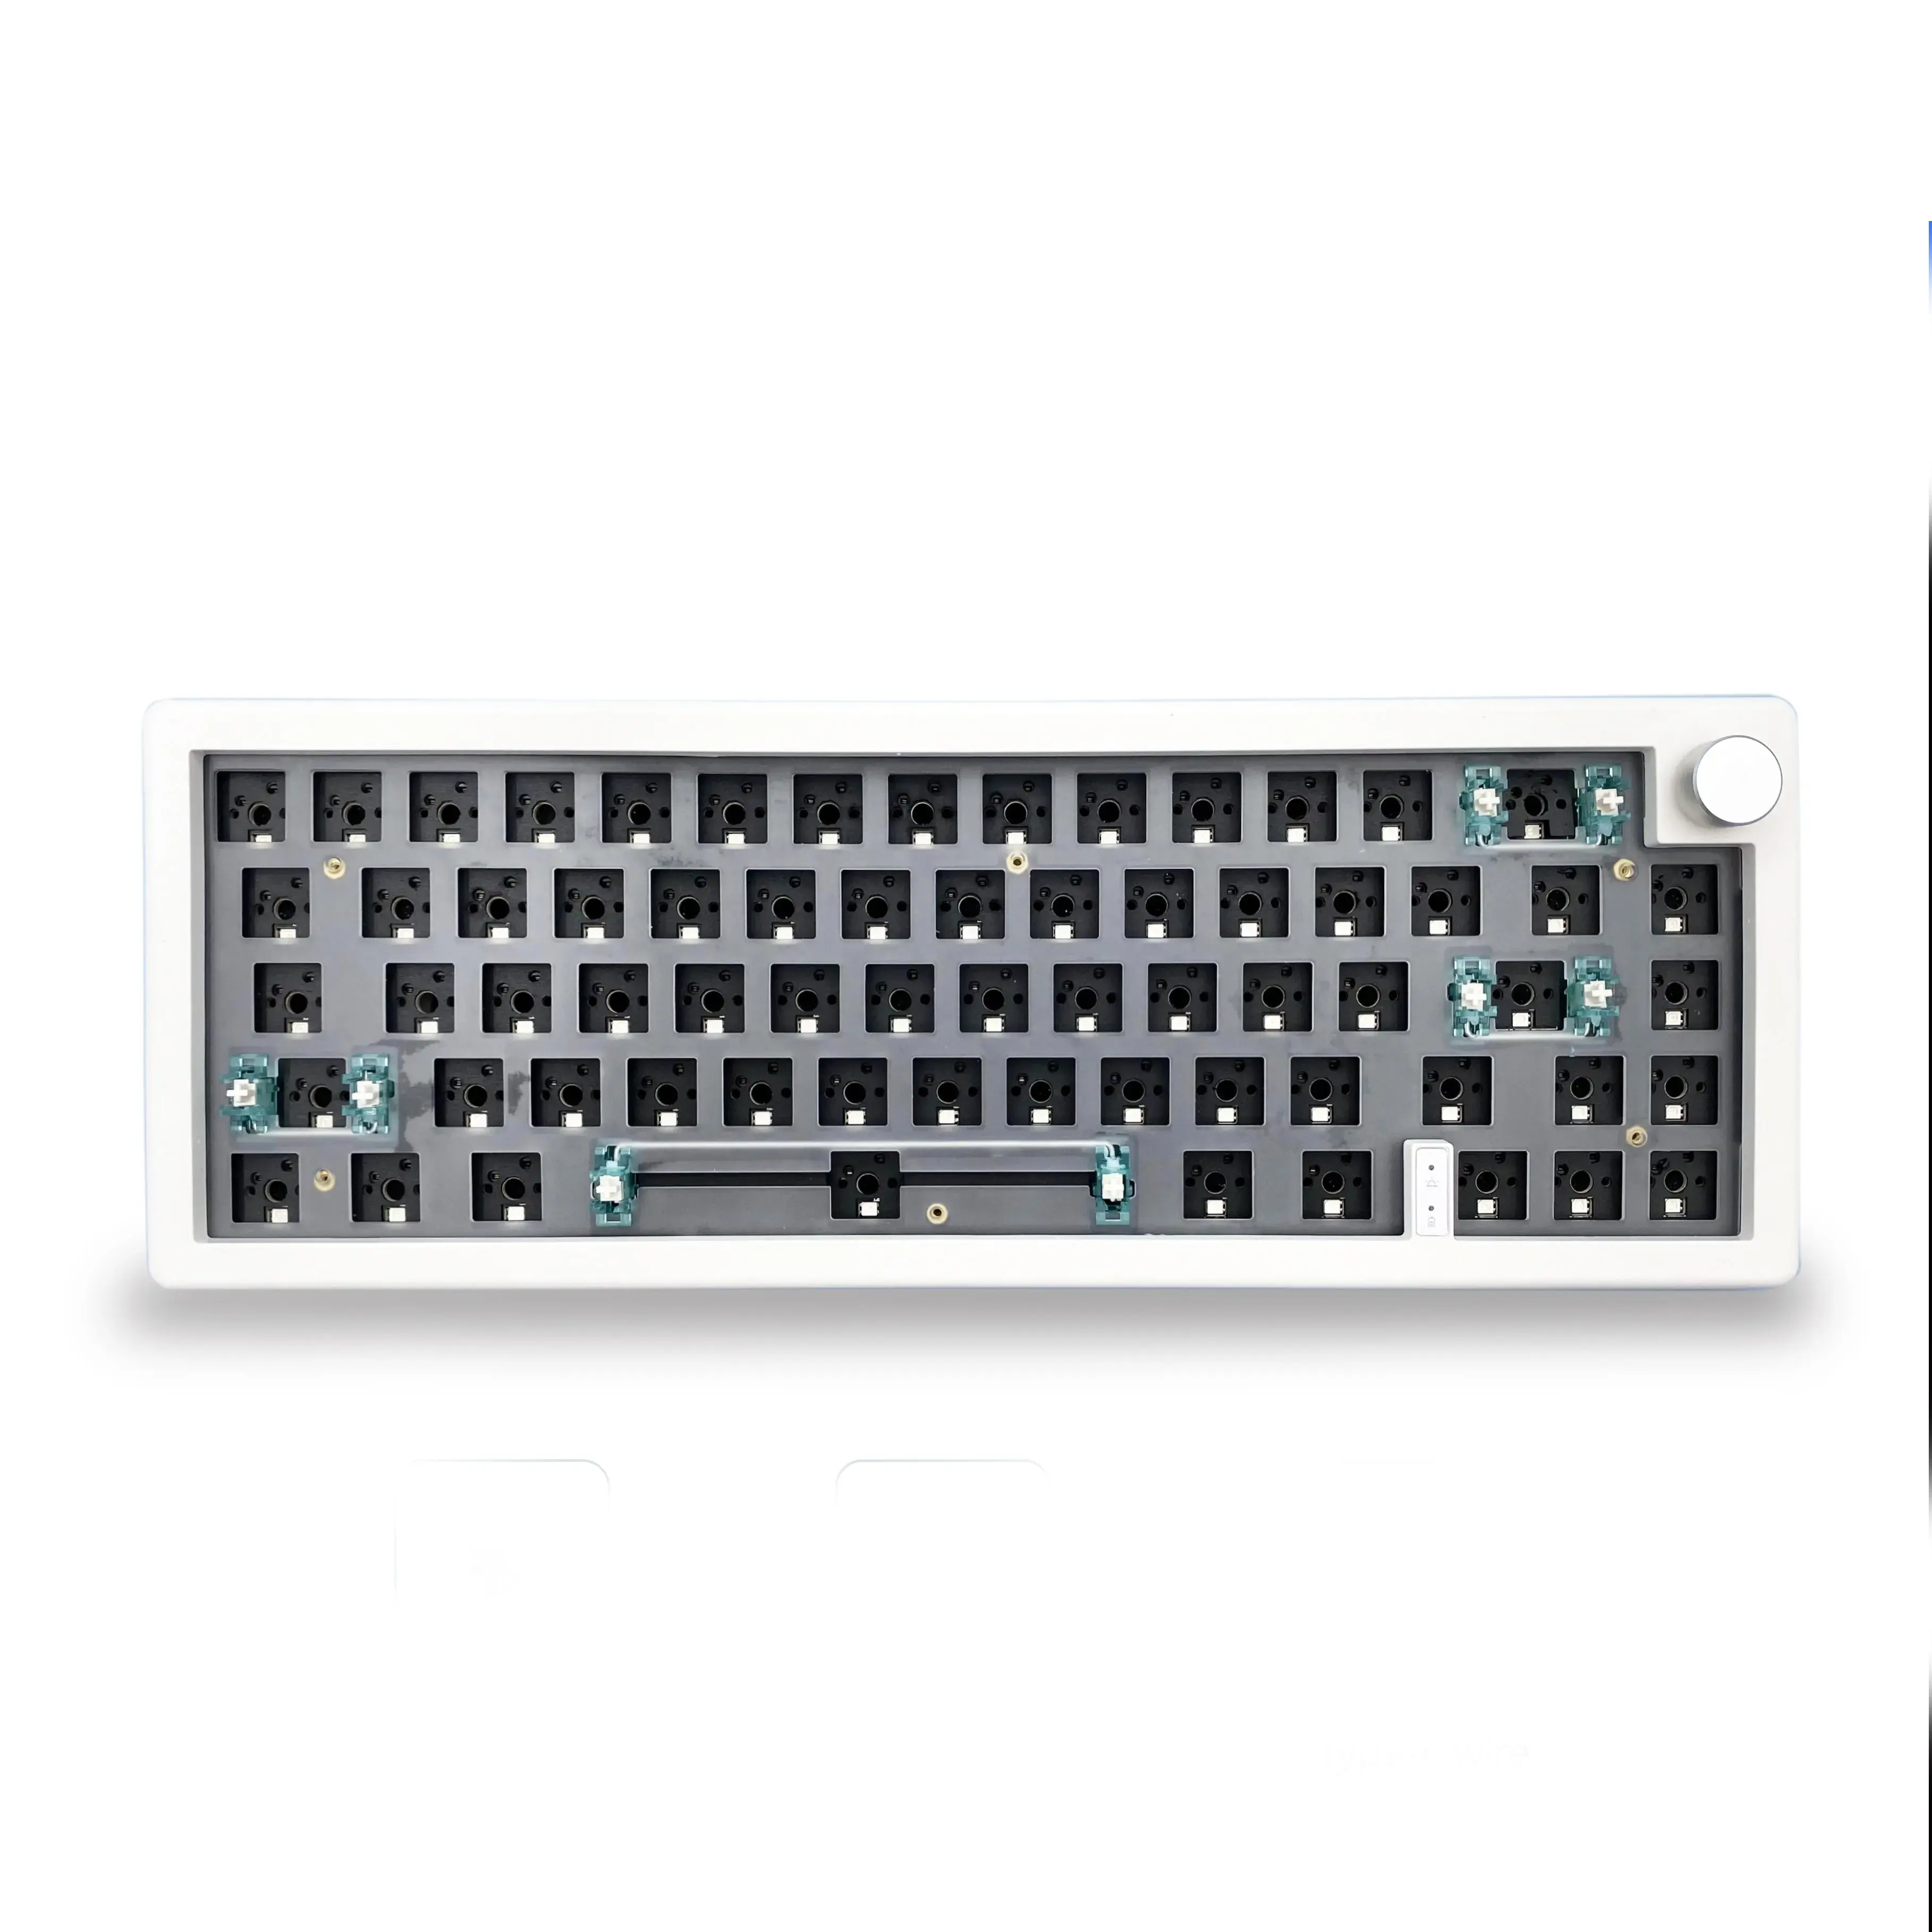 हॉट स्वैपेबल मैकेनिकल कीबोर्ड गैसकेट 2.4जी आरजीबी बैकलिट गैसकेट स्ट्रक्चर कीबोर्ड 3 मोड अनुकूलित कीबोर्ड